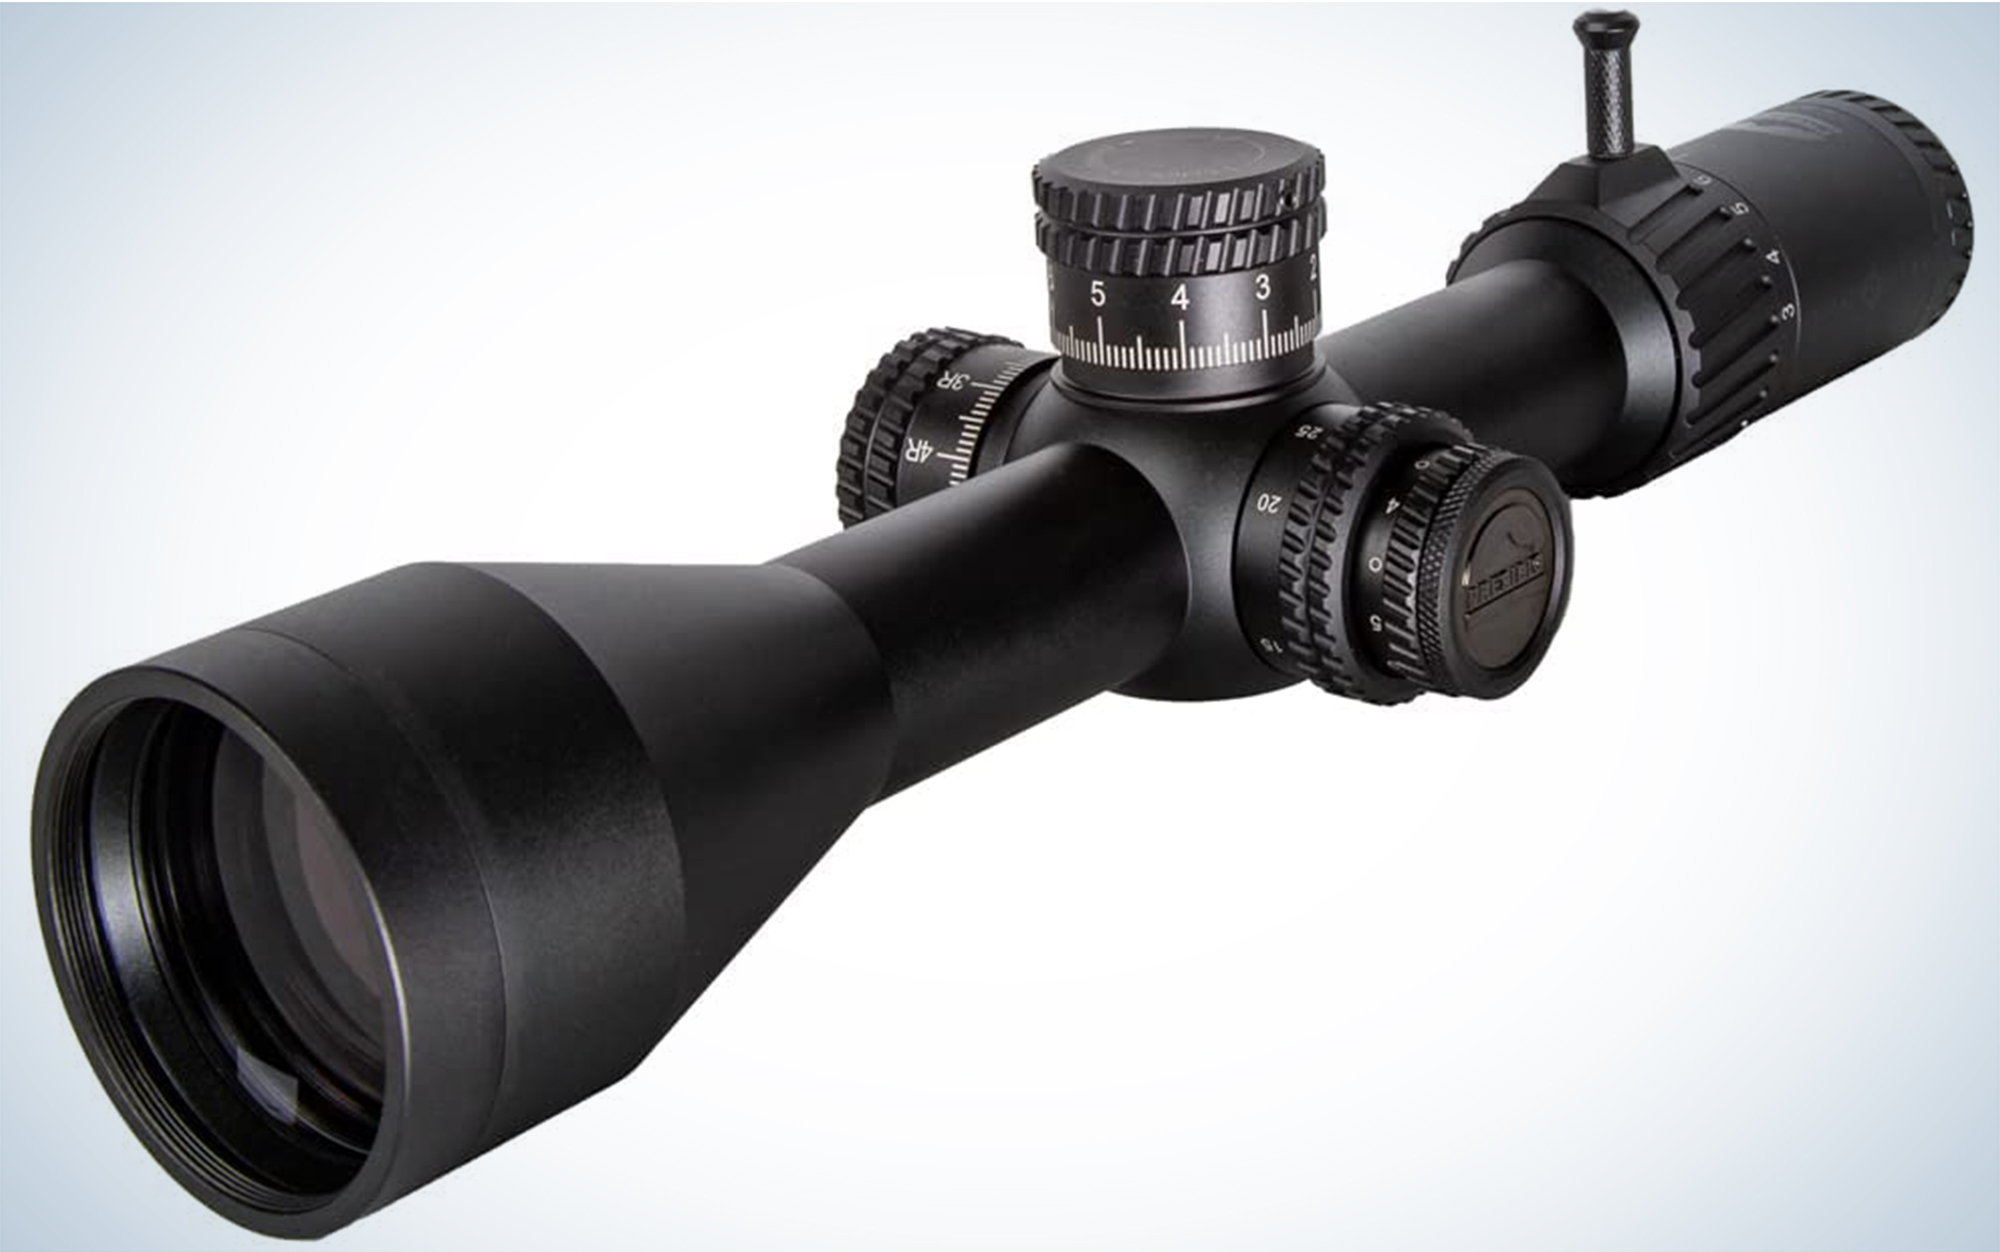 The Sightmark Presidio 3-18x50 LR2 is the best precision scopee under $400.